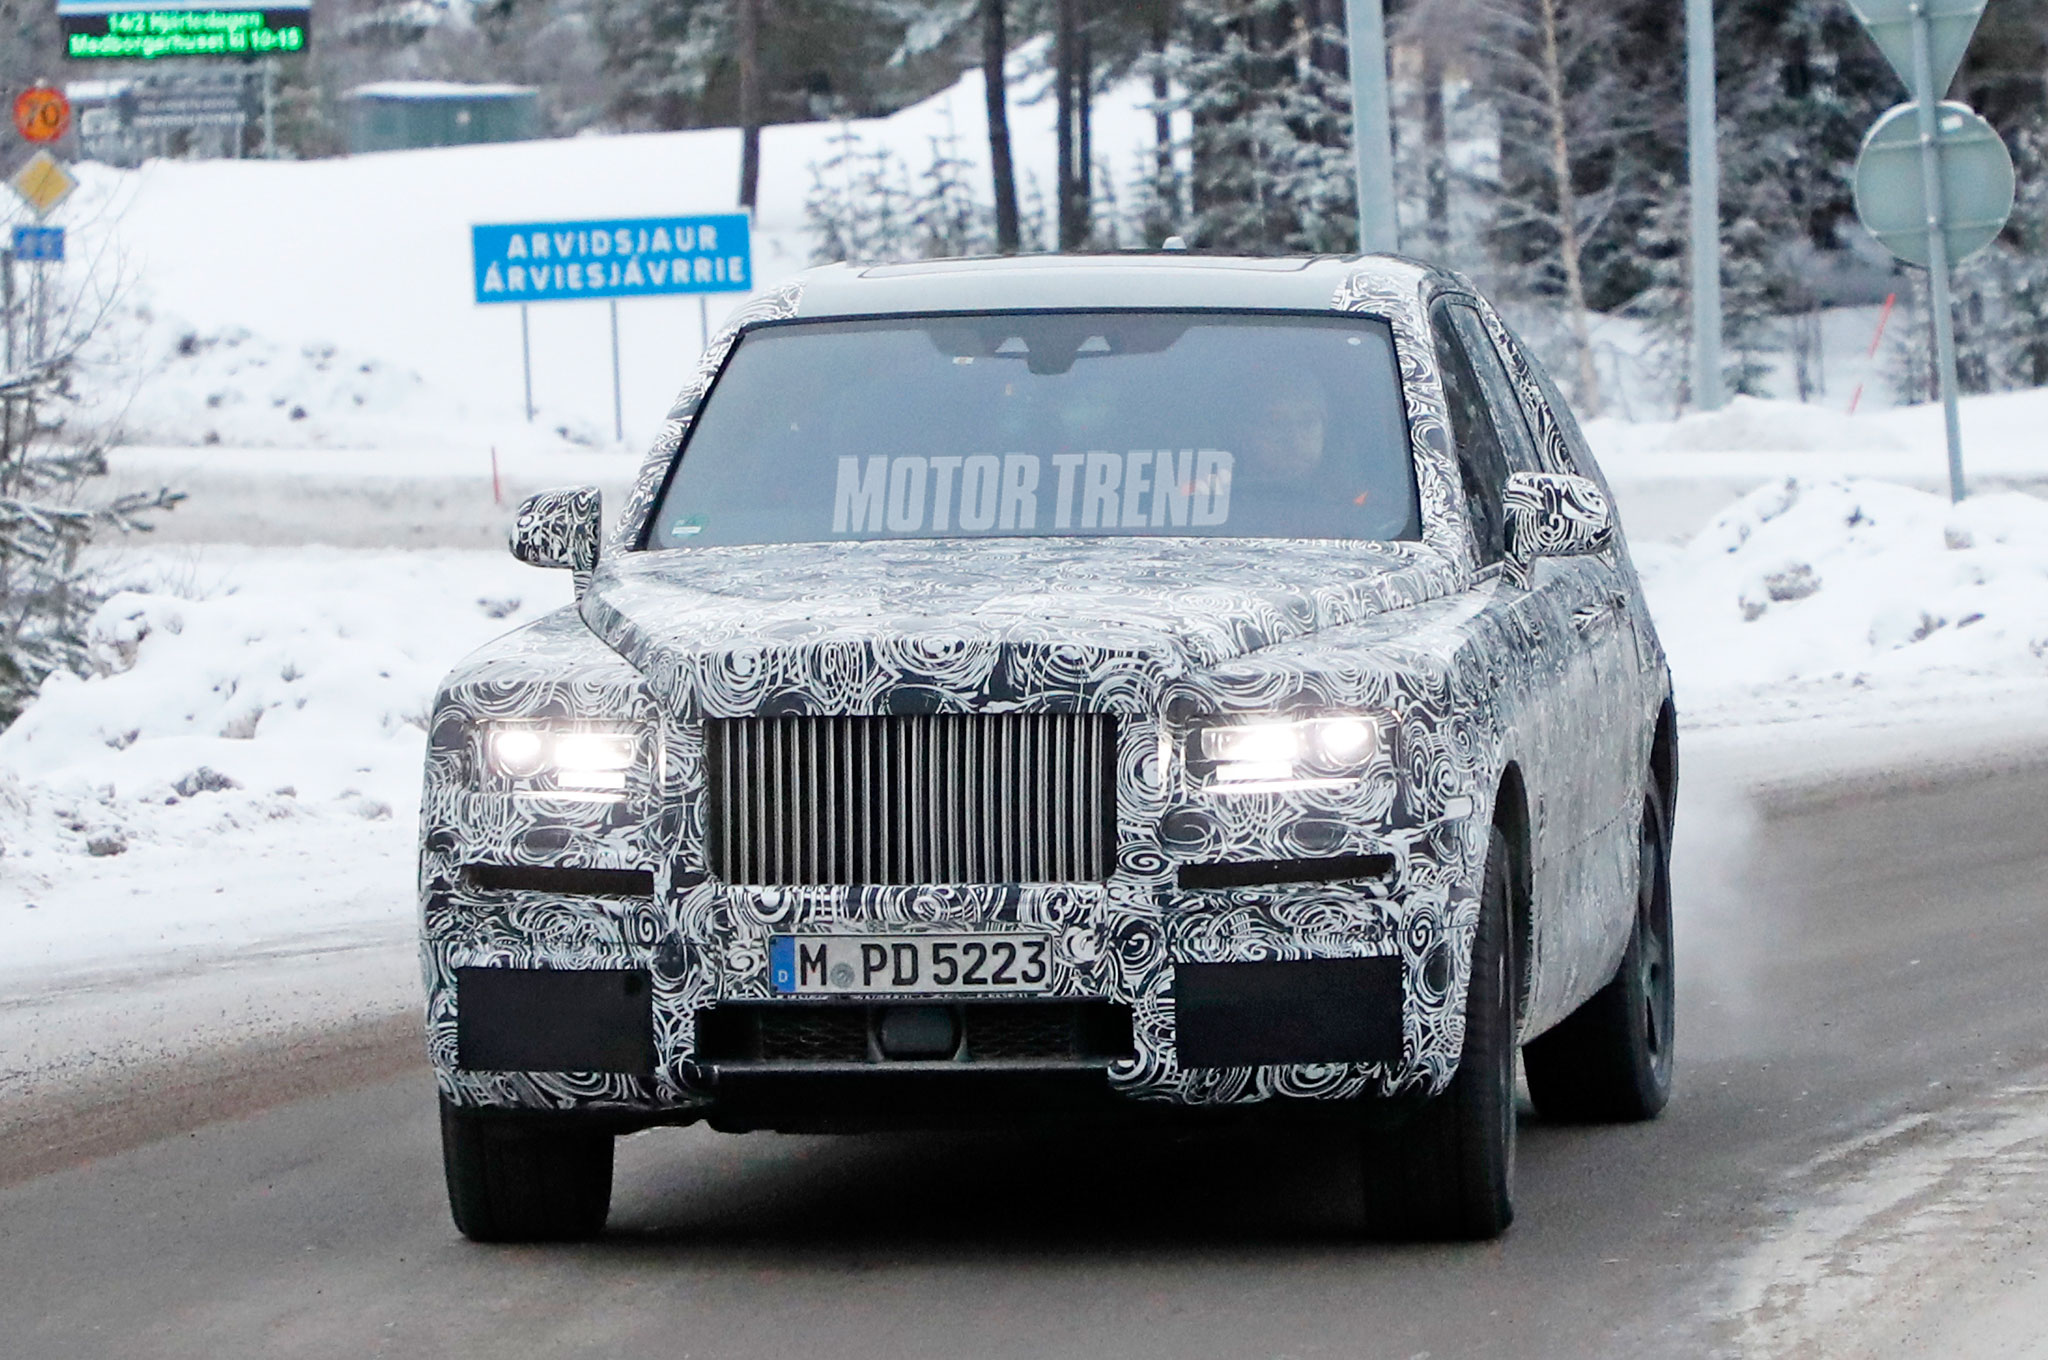 Rolls-Royce Cullinan SUV Gets Spied in Snowy Tests